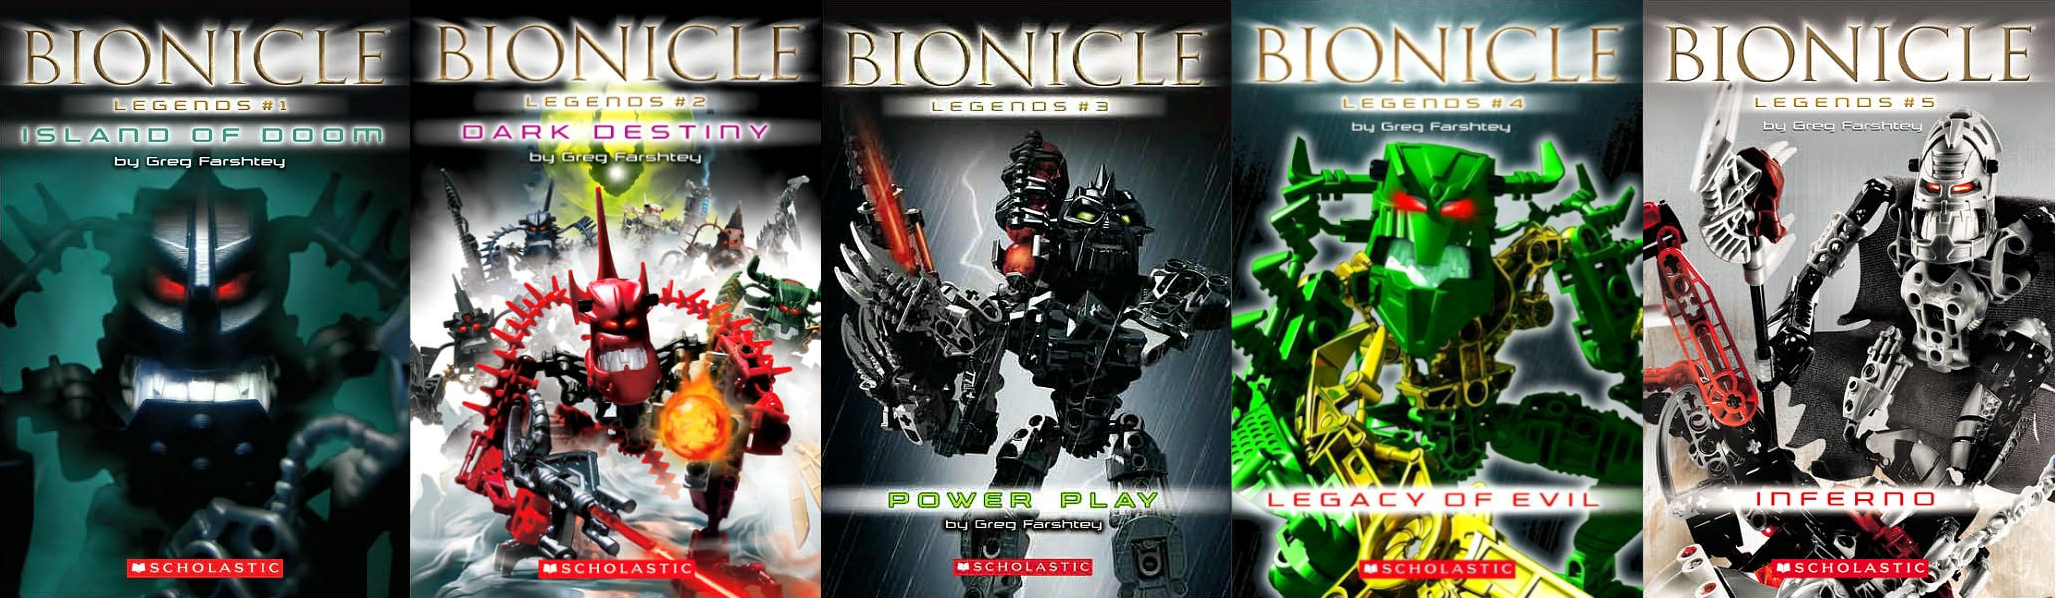 bionicle_legends_1-5.png